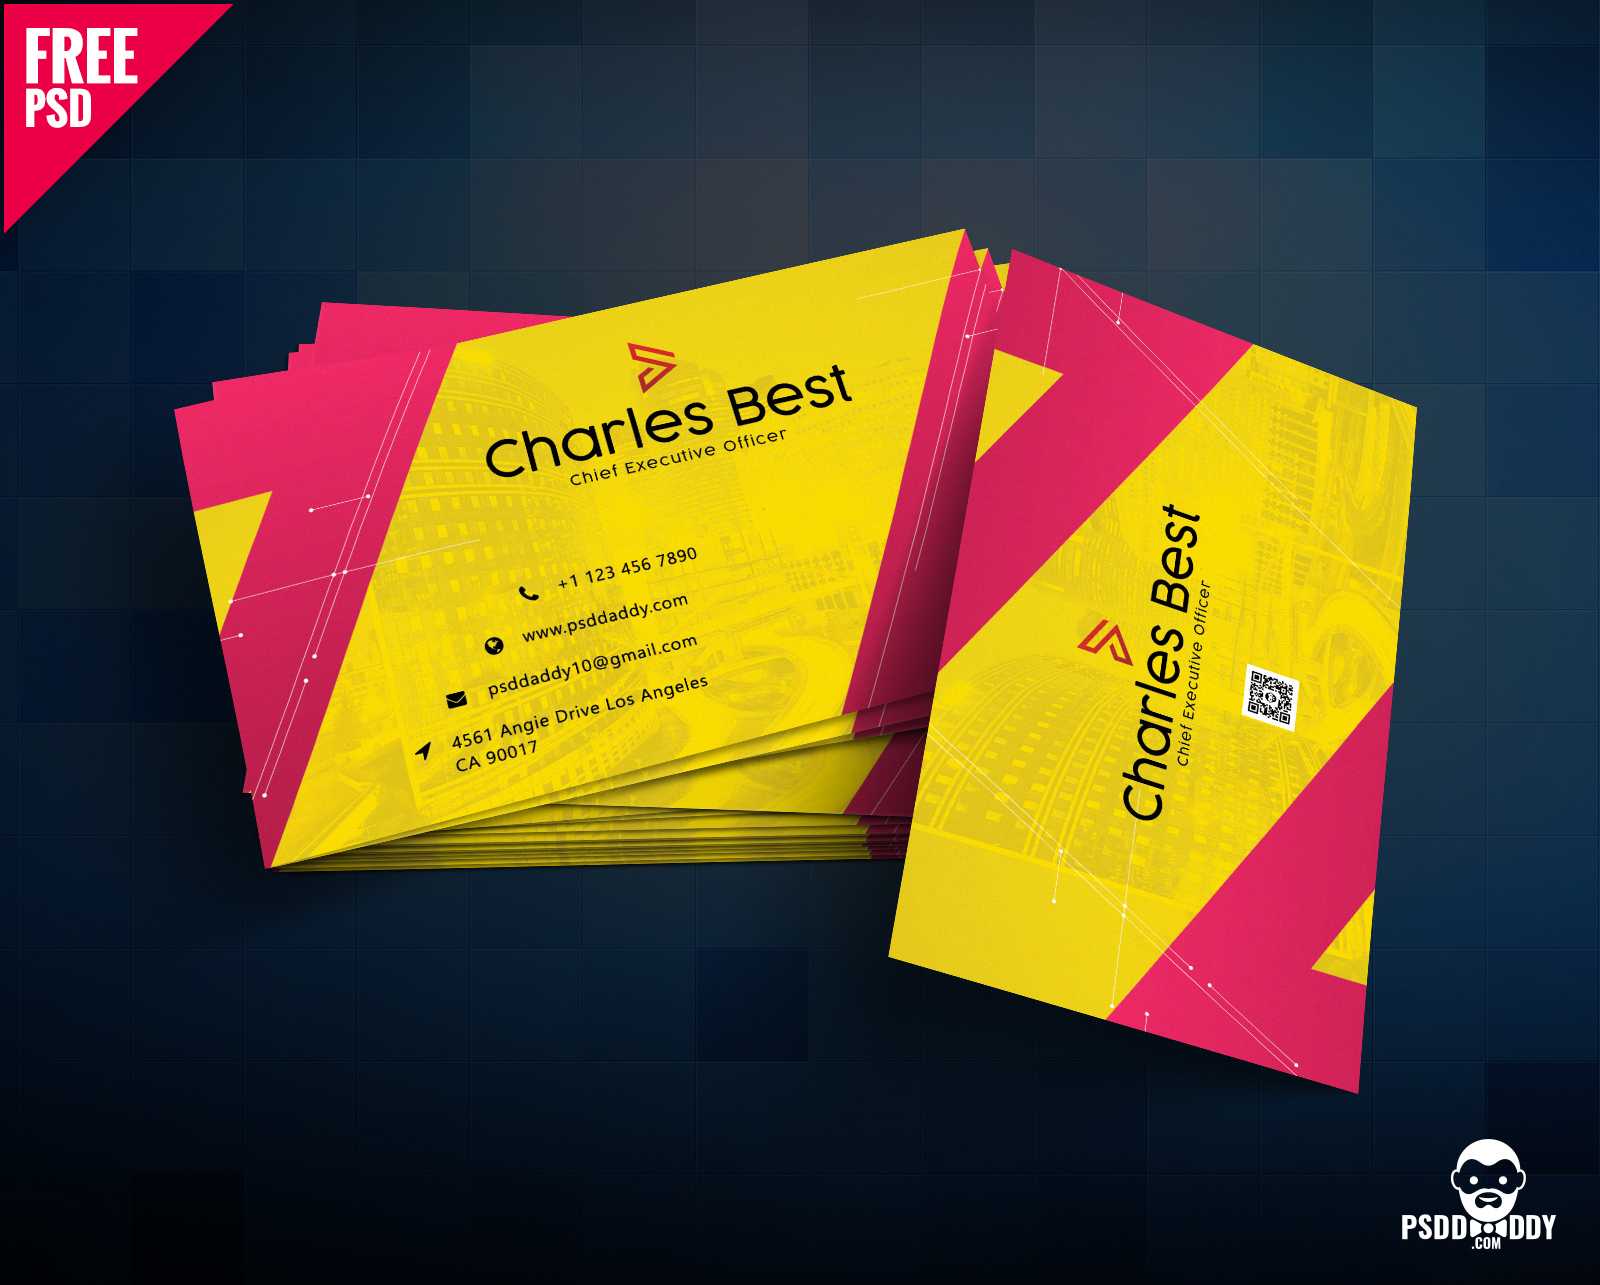 Download] Creative Business Card Free Psd | Psddaddy Regarding Business Card Maker Template